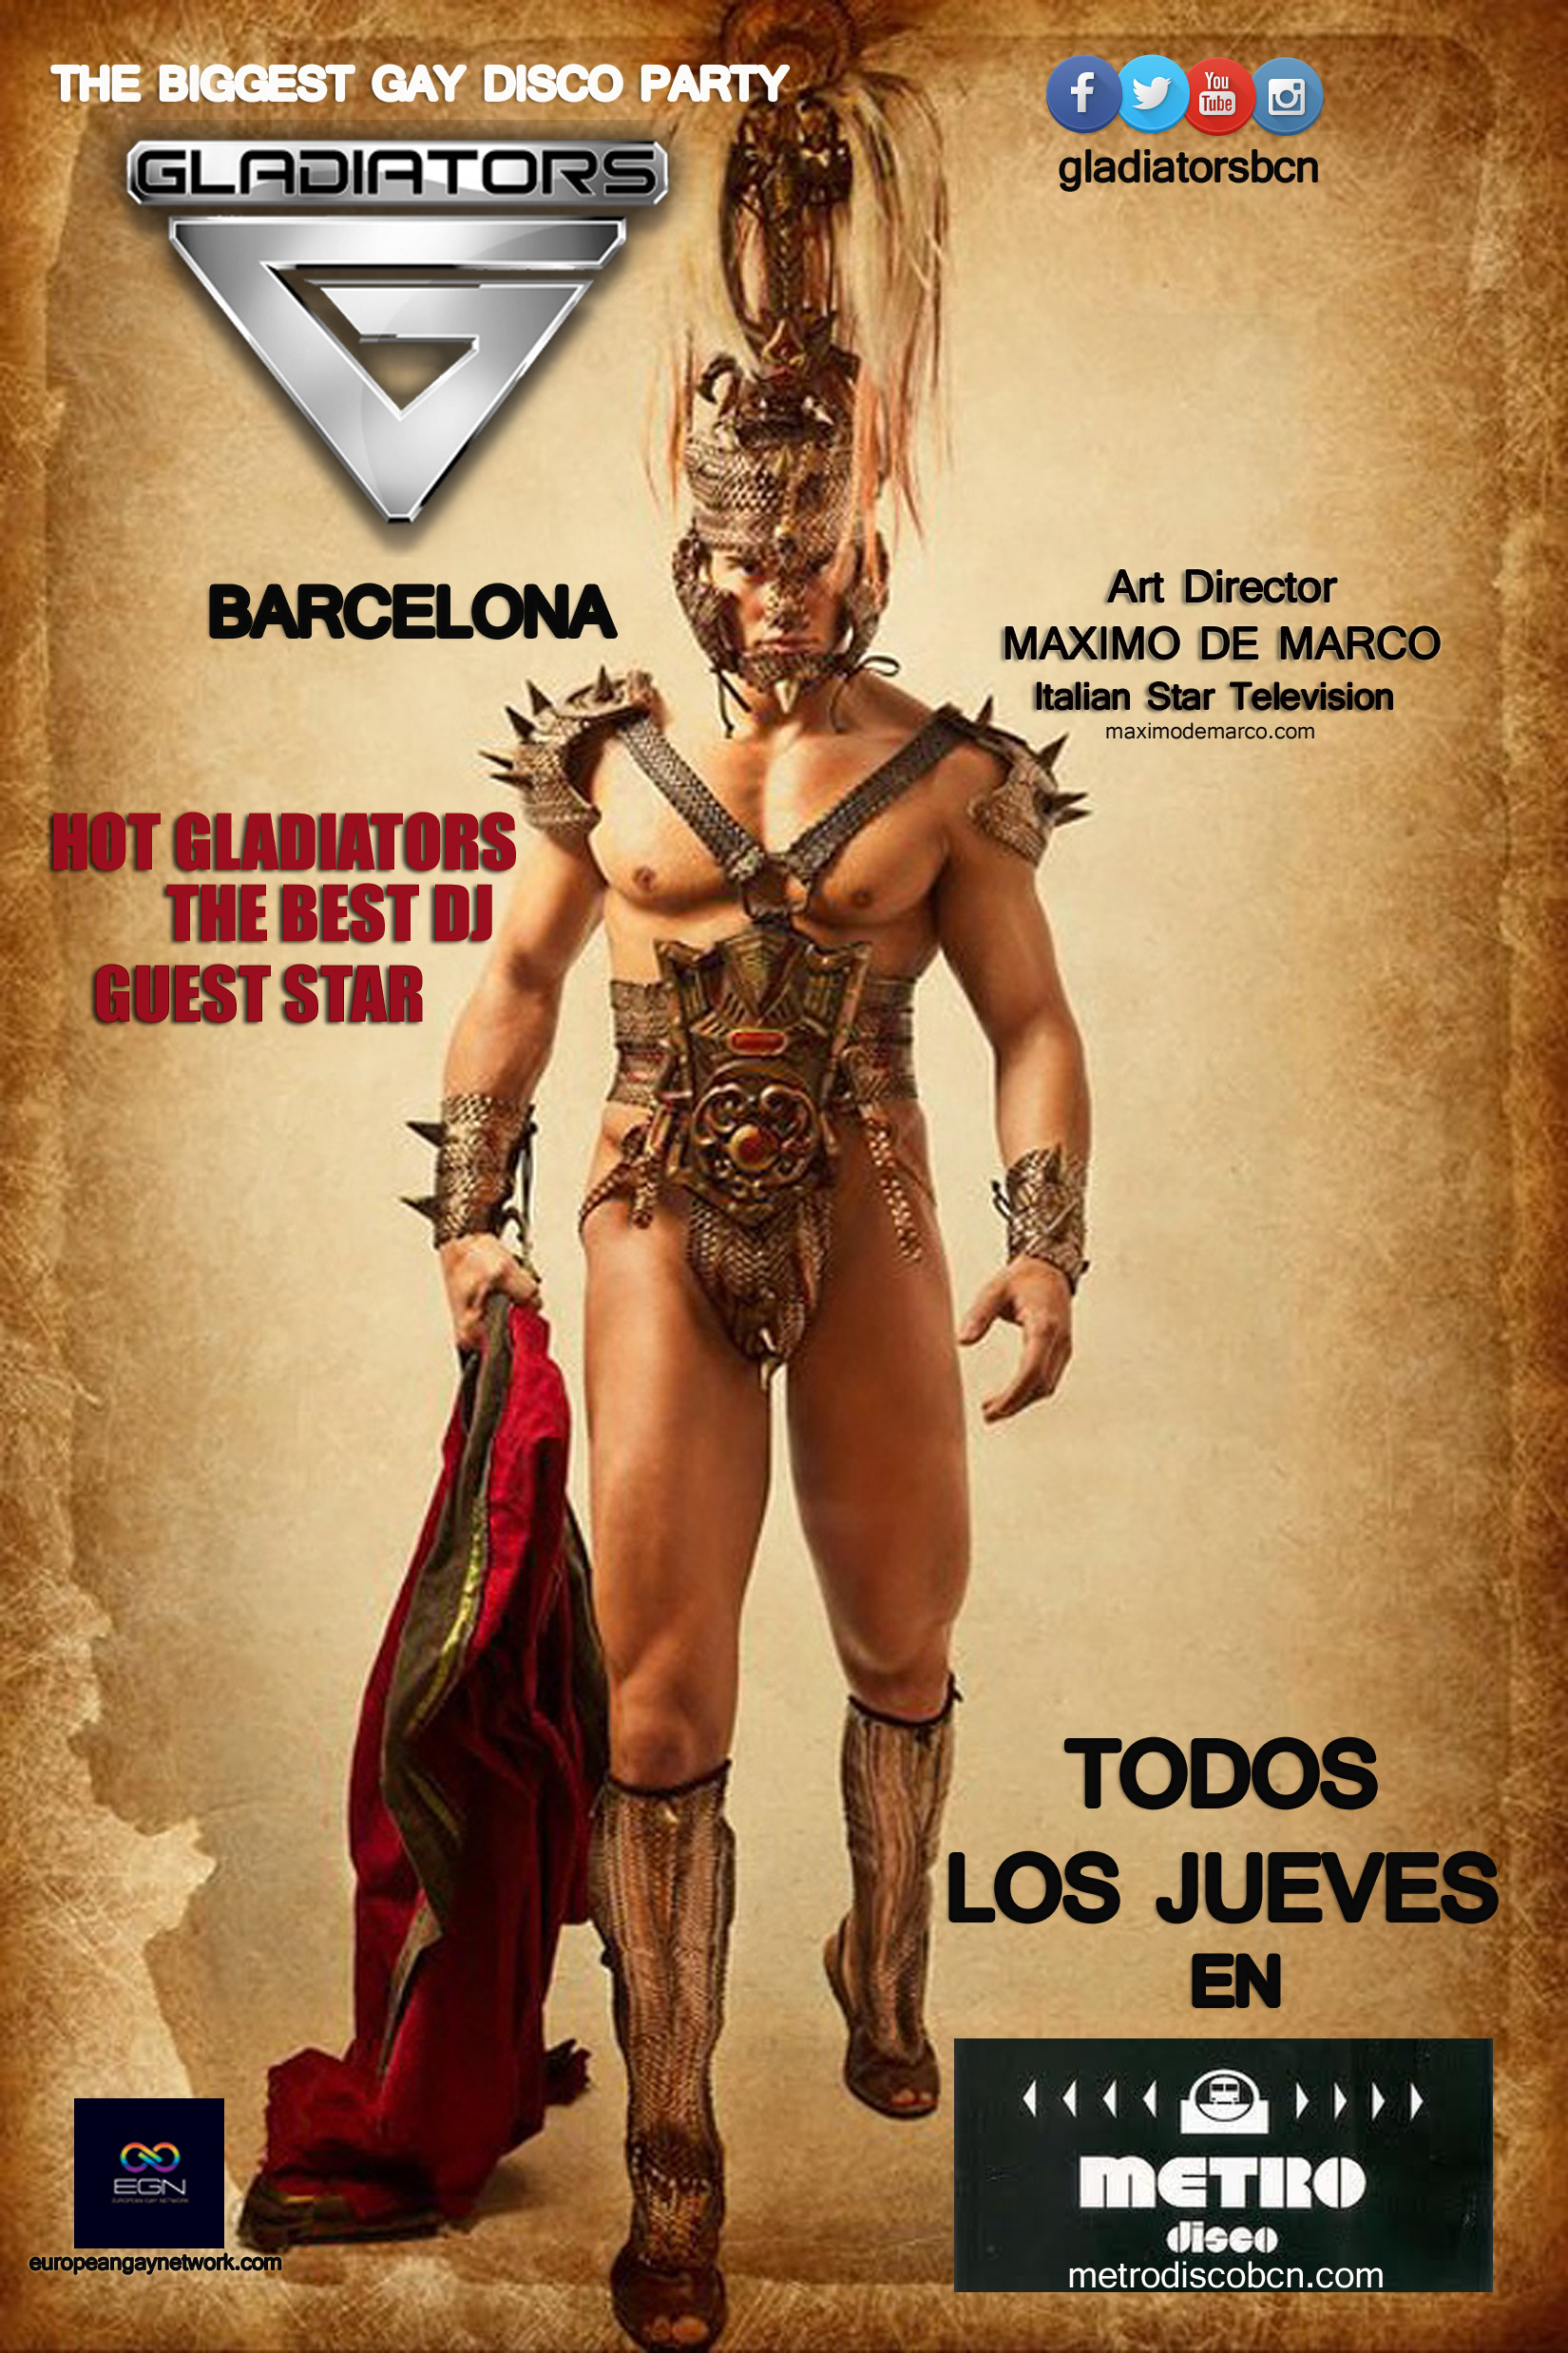 [IMAGE:https://www.romecentral.com/wp-content/uploads/2018/05/Gladiators-Gay-Party_Barcelona.jpg]